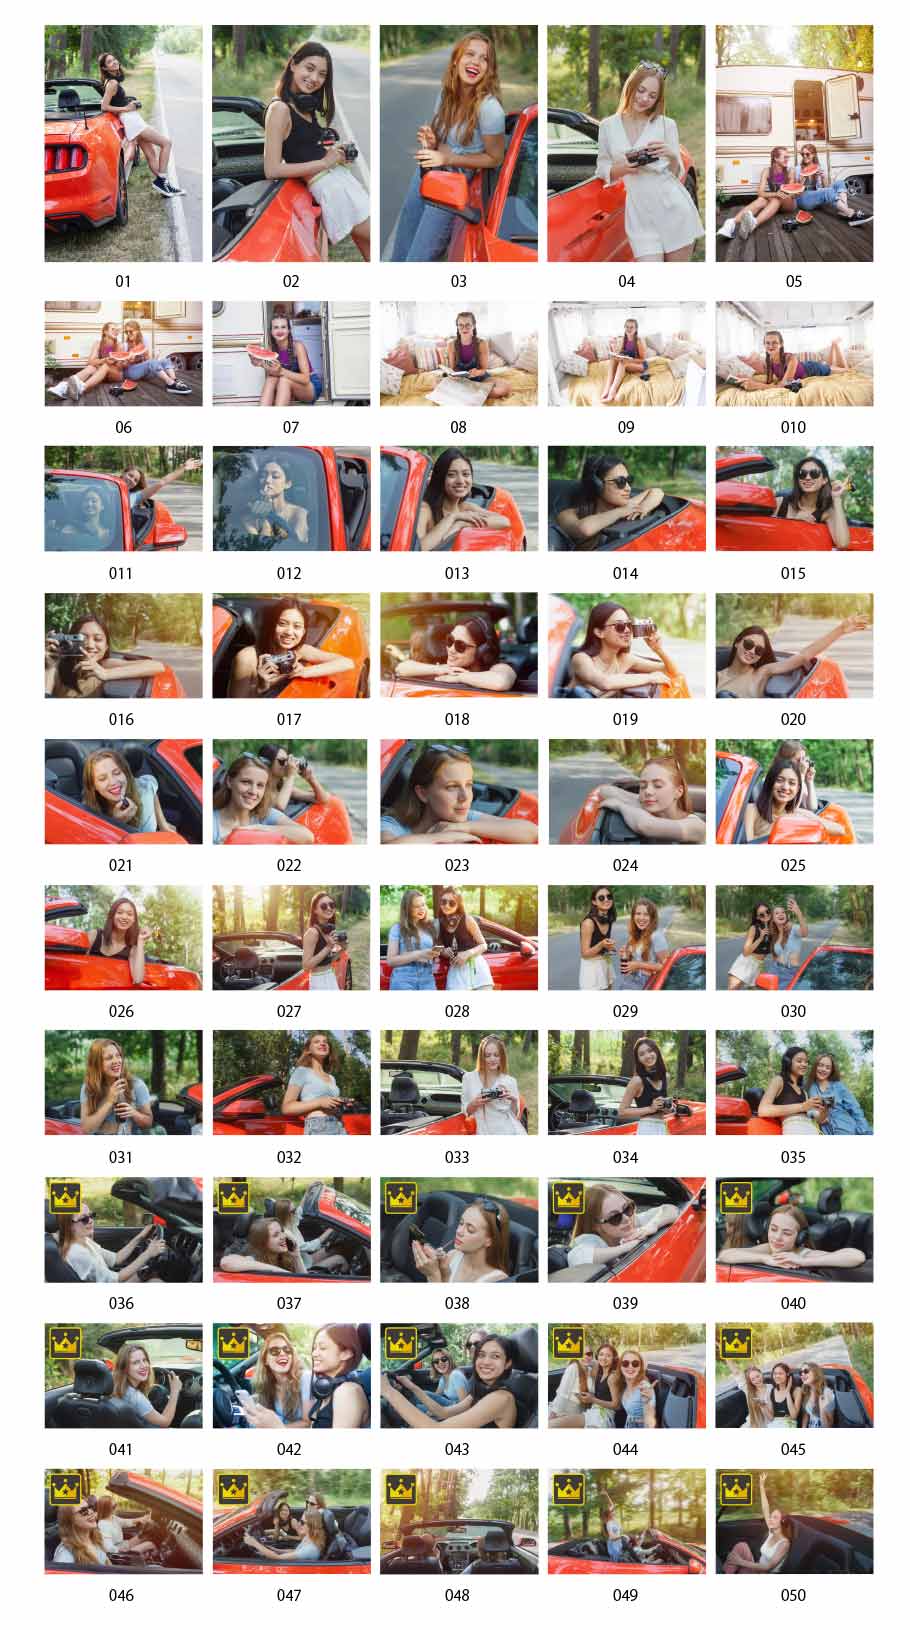 Photos of driving women